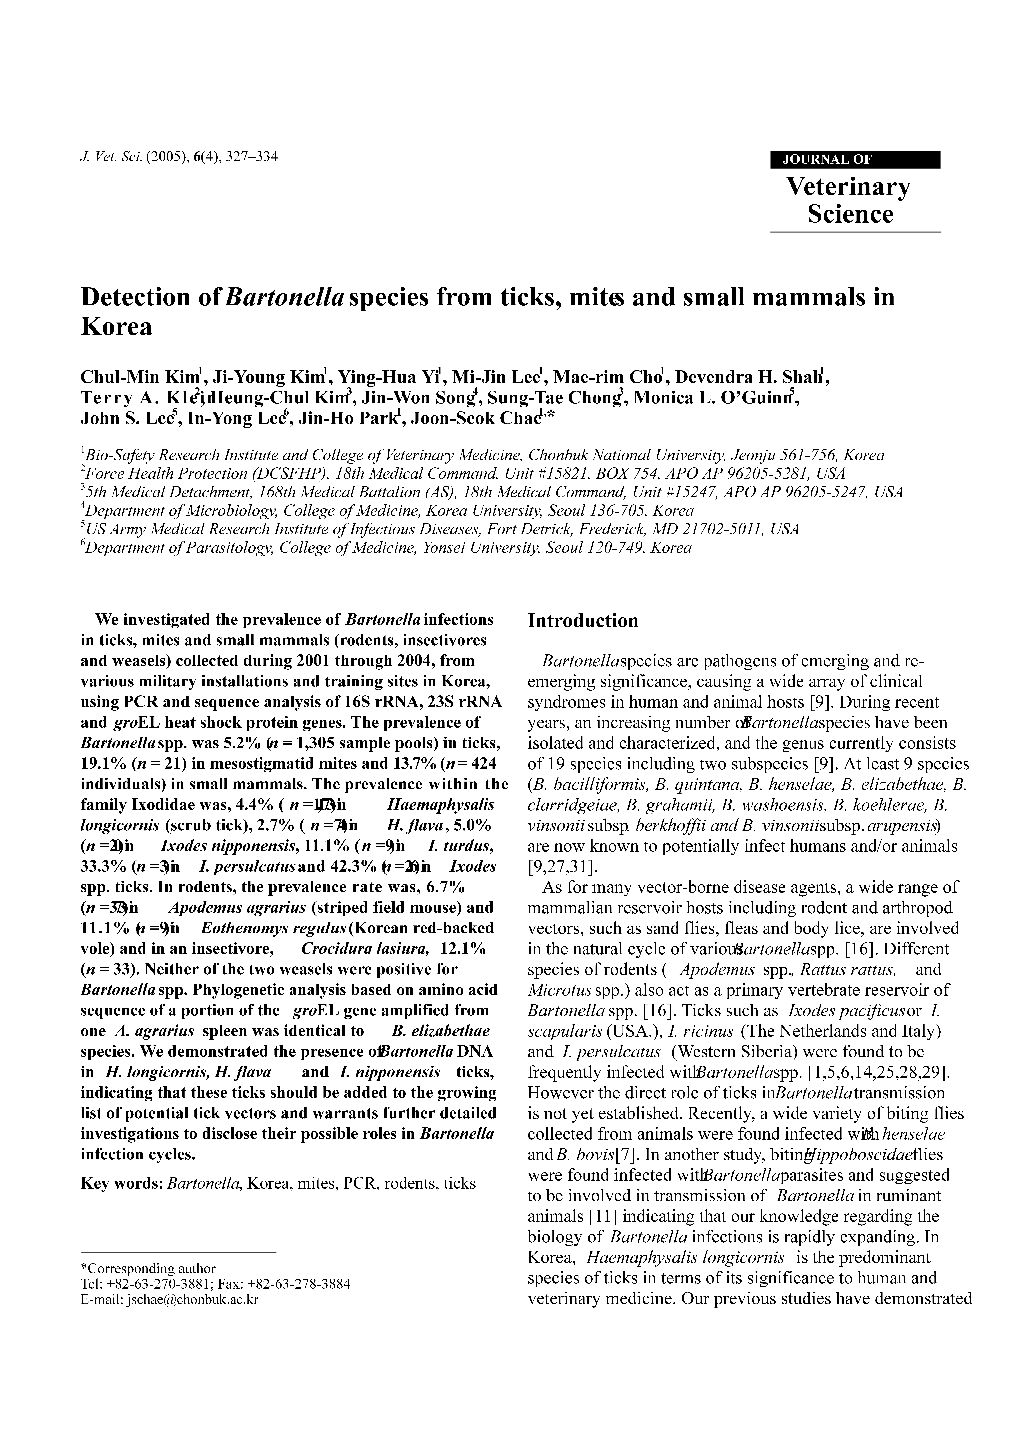 Veterinary Science Detection of Bartonella Species from Ticks, Mites and Small Mammals in Korea